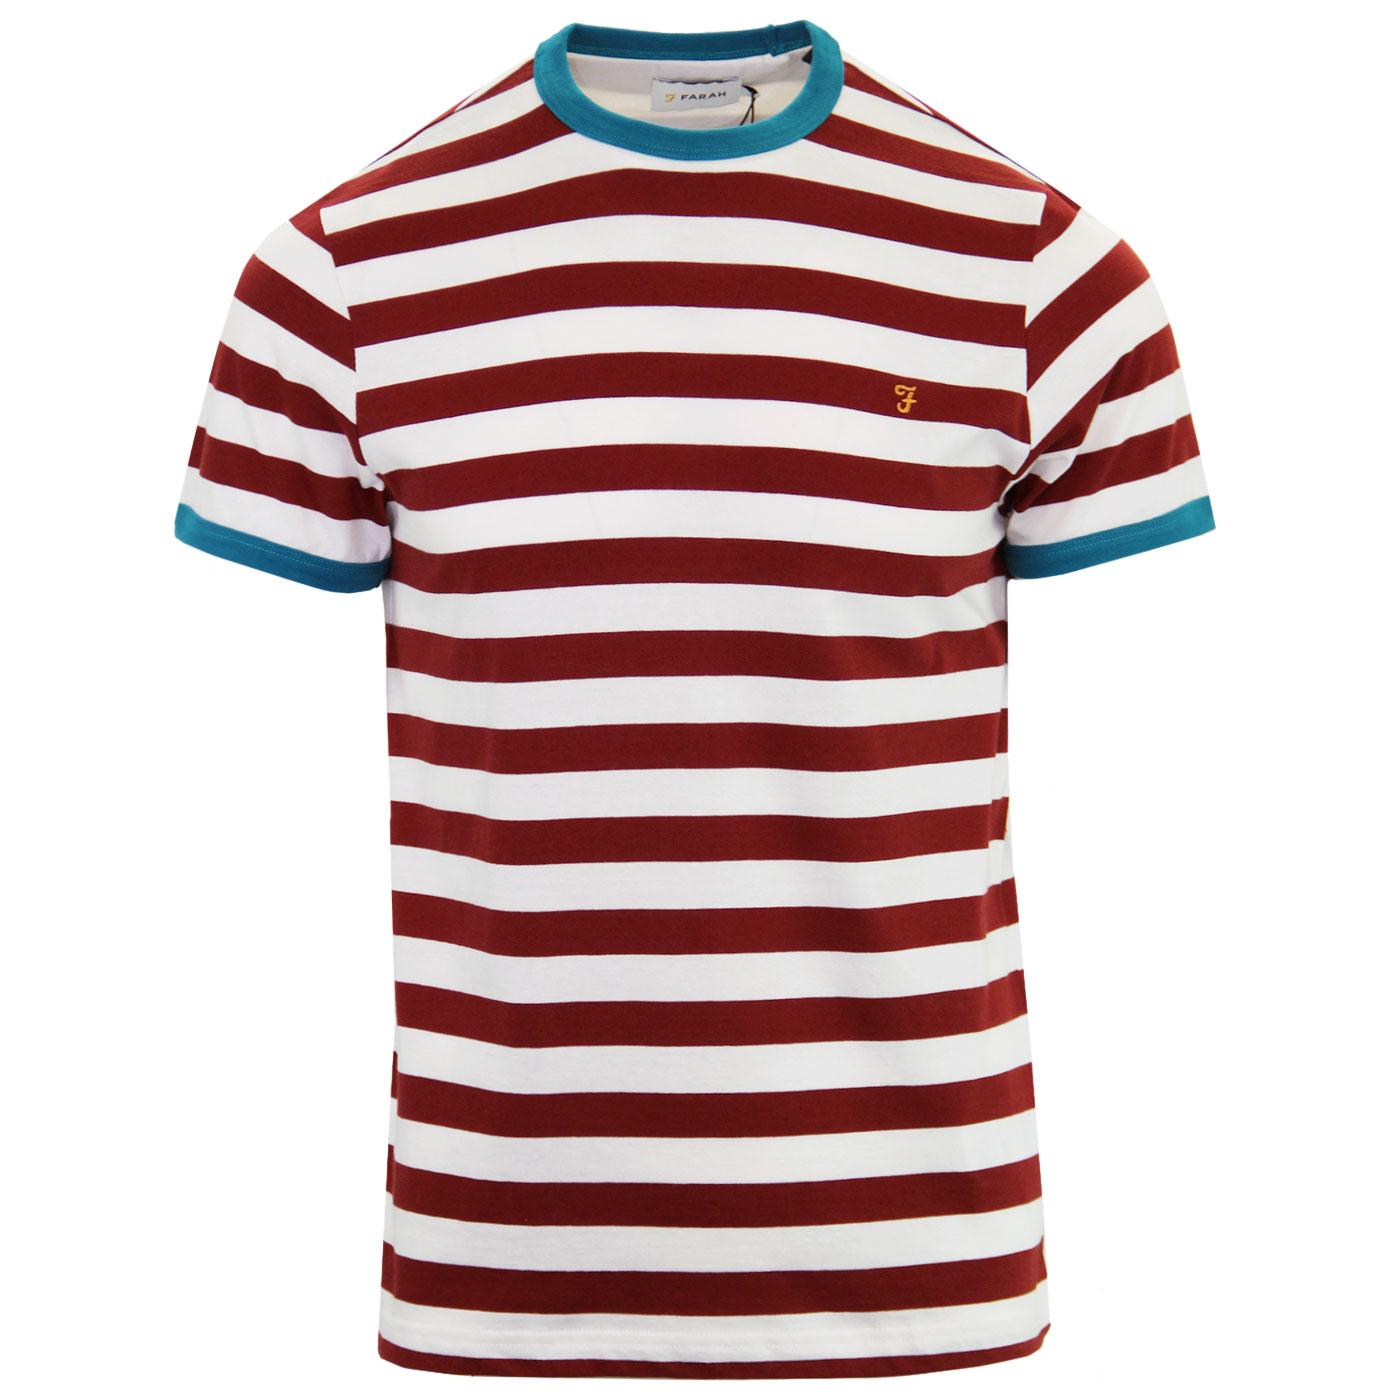 FARAH Belgrove Mens Retro Striped Ringer T-Shirt Bright Aqua